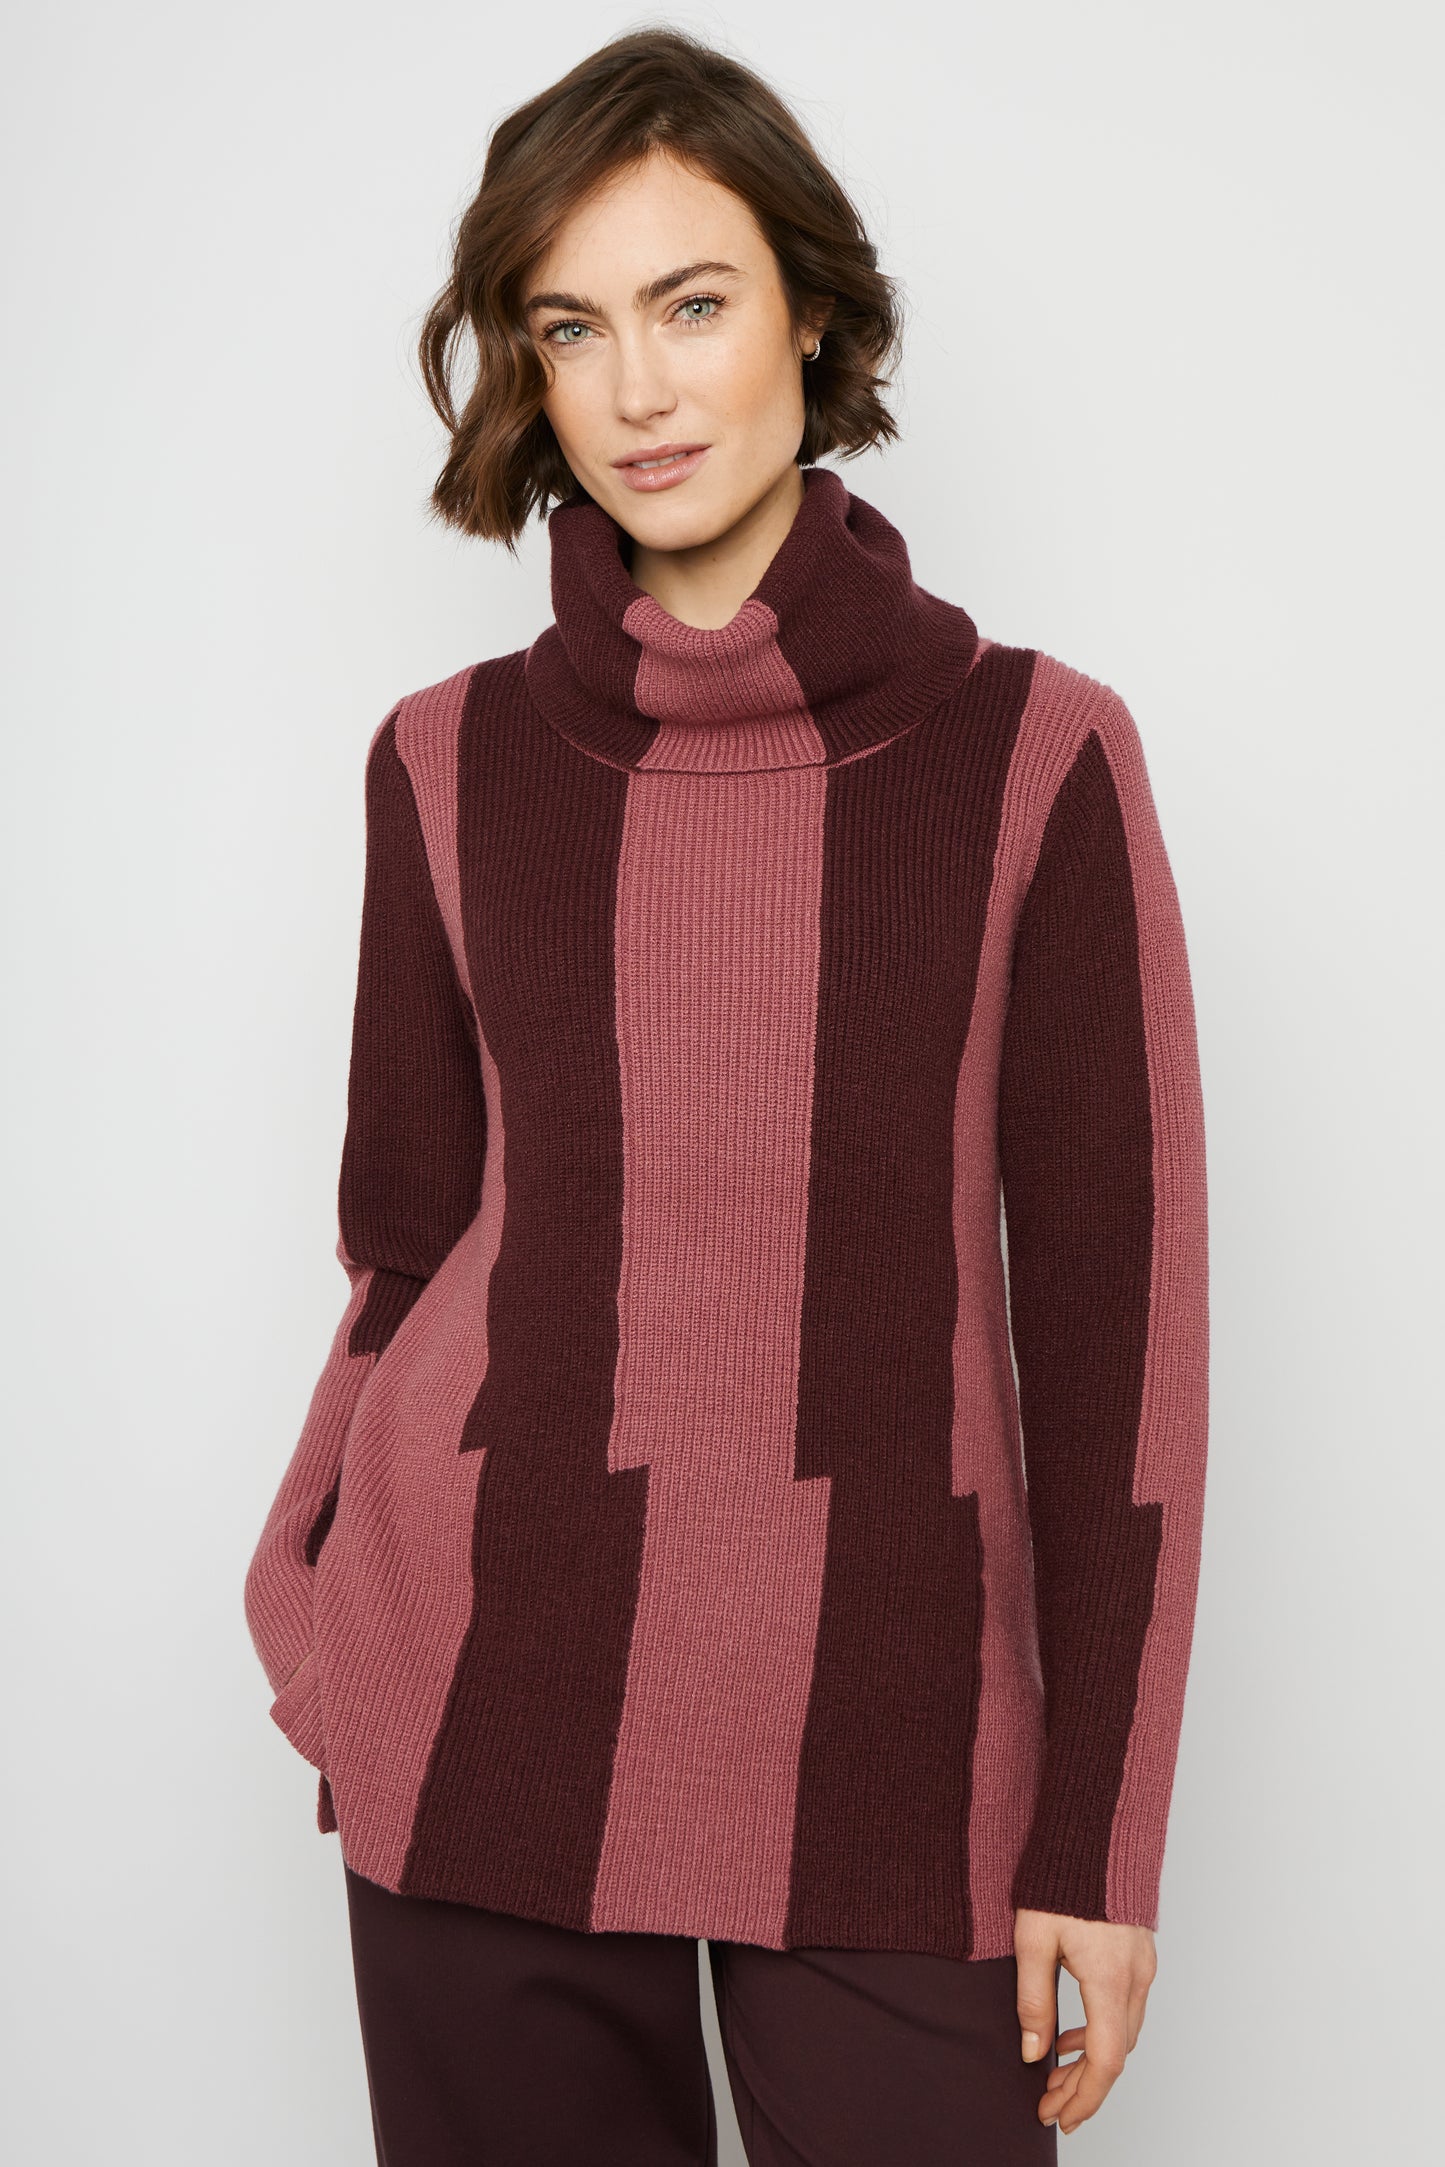 BYLYSE Stripe Cowl Neck Sweater